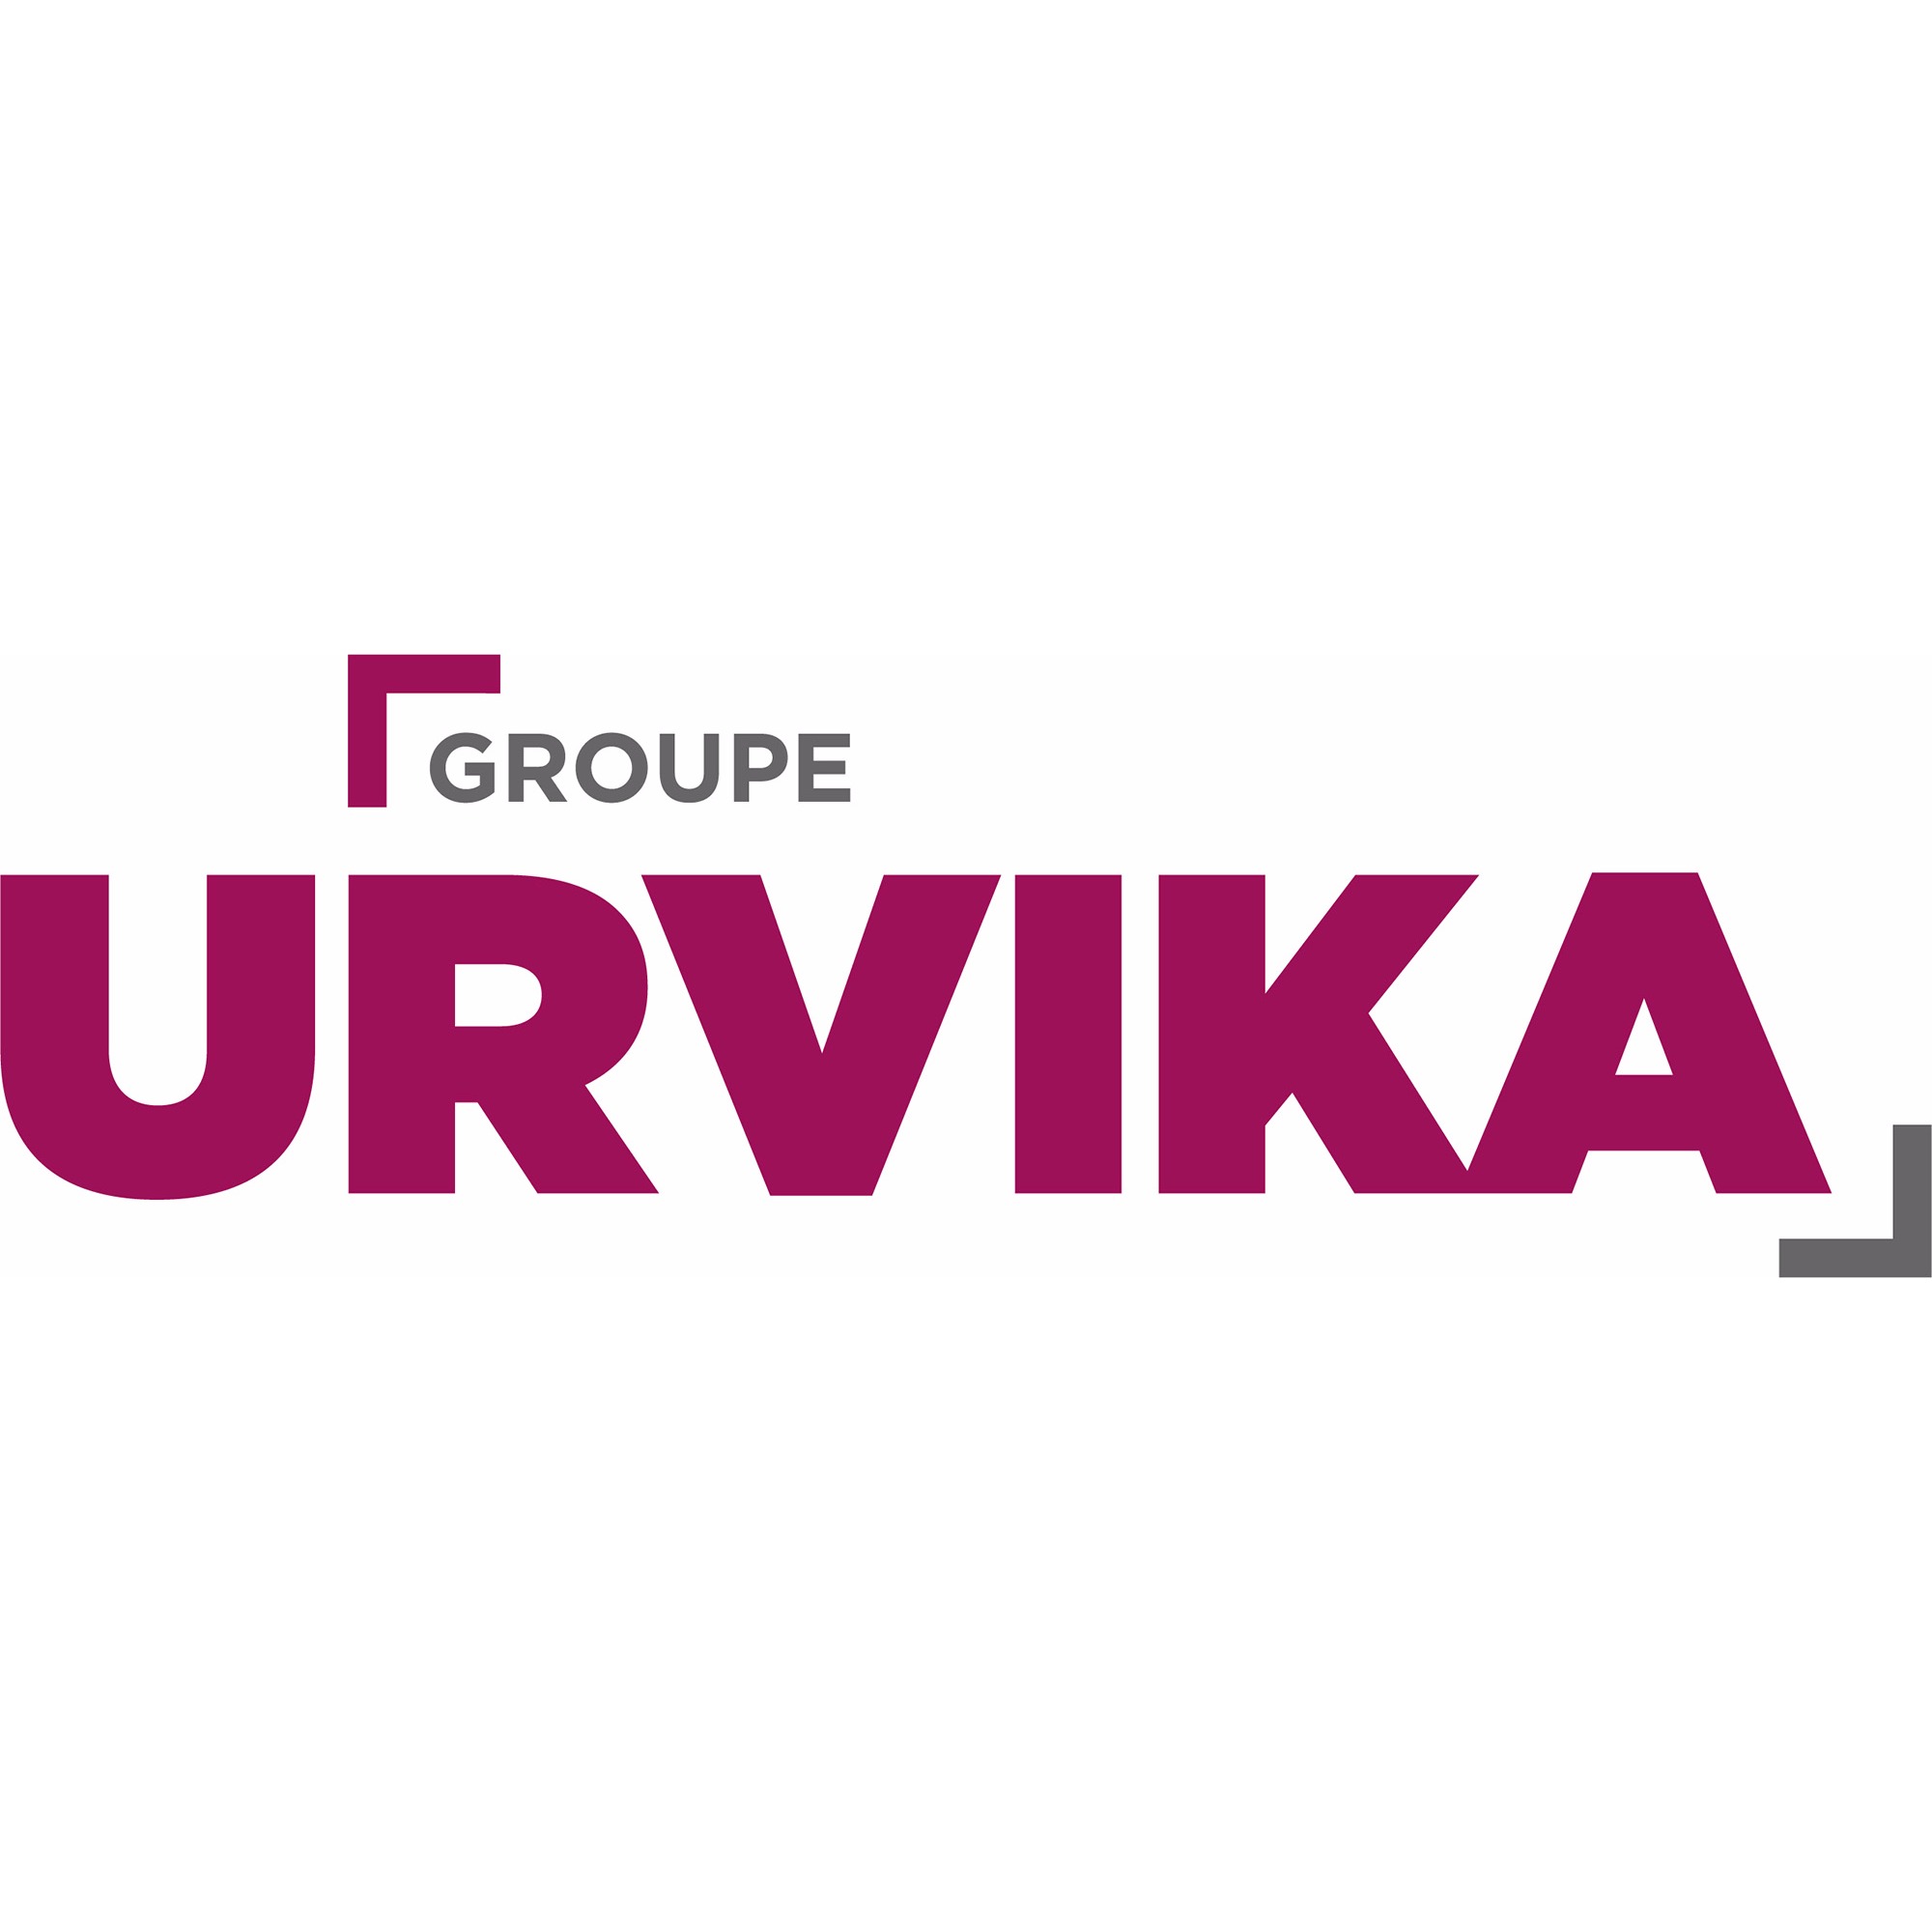 the Urvika logo.